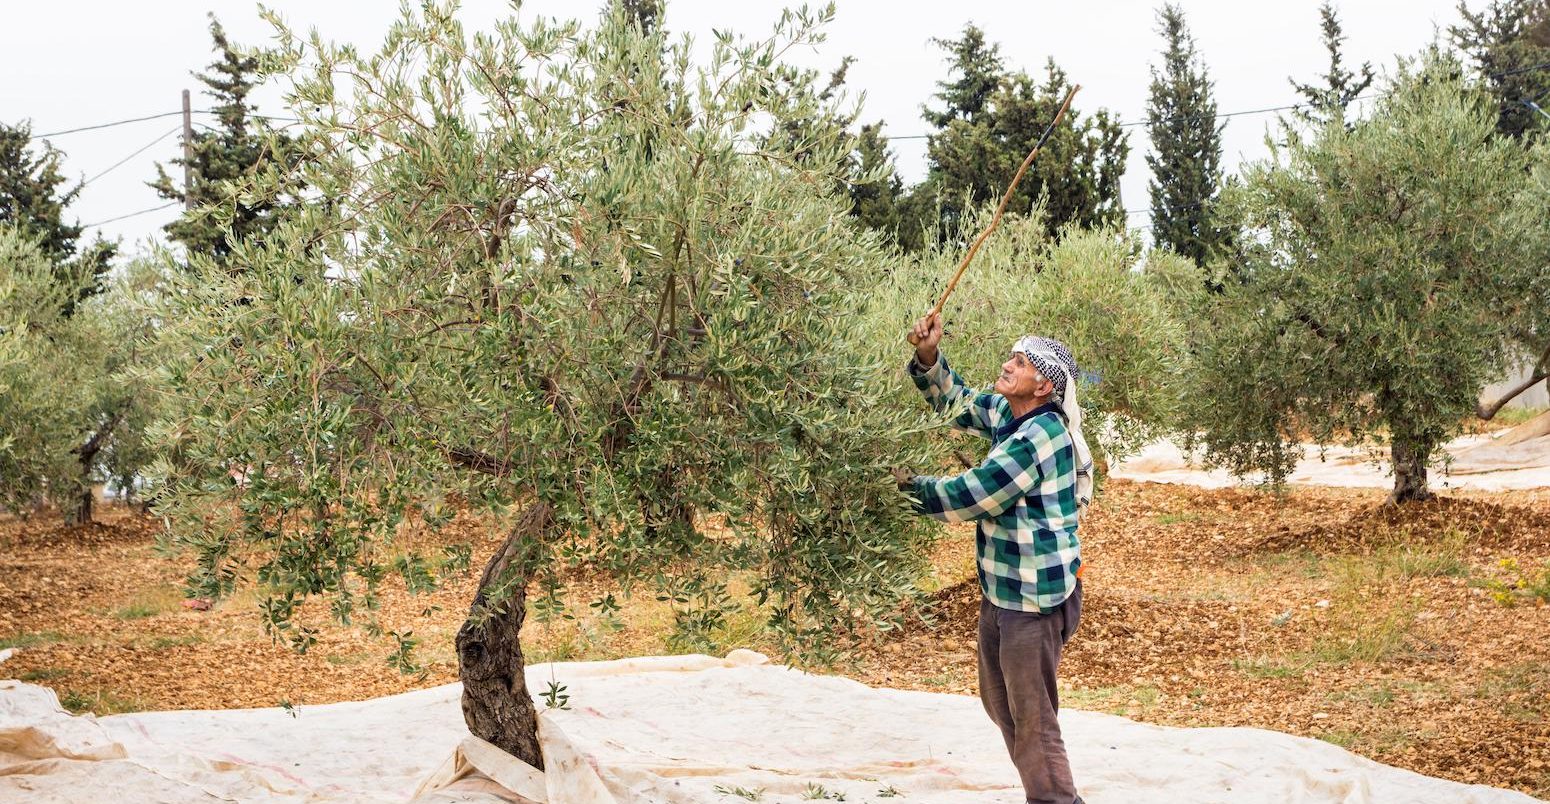 Elderly man hitting an olive tree during harvest season in Lebanon.